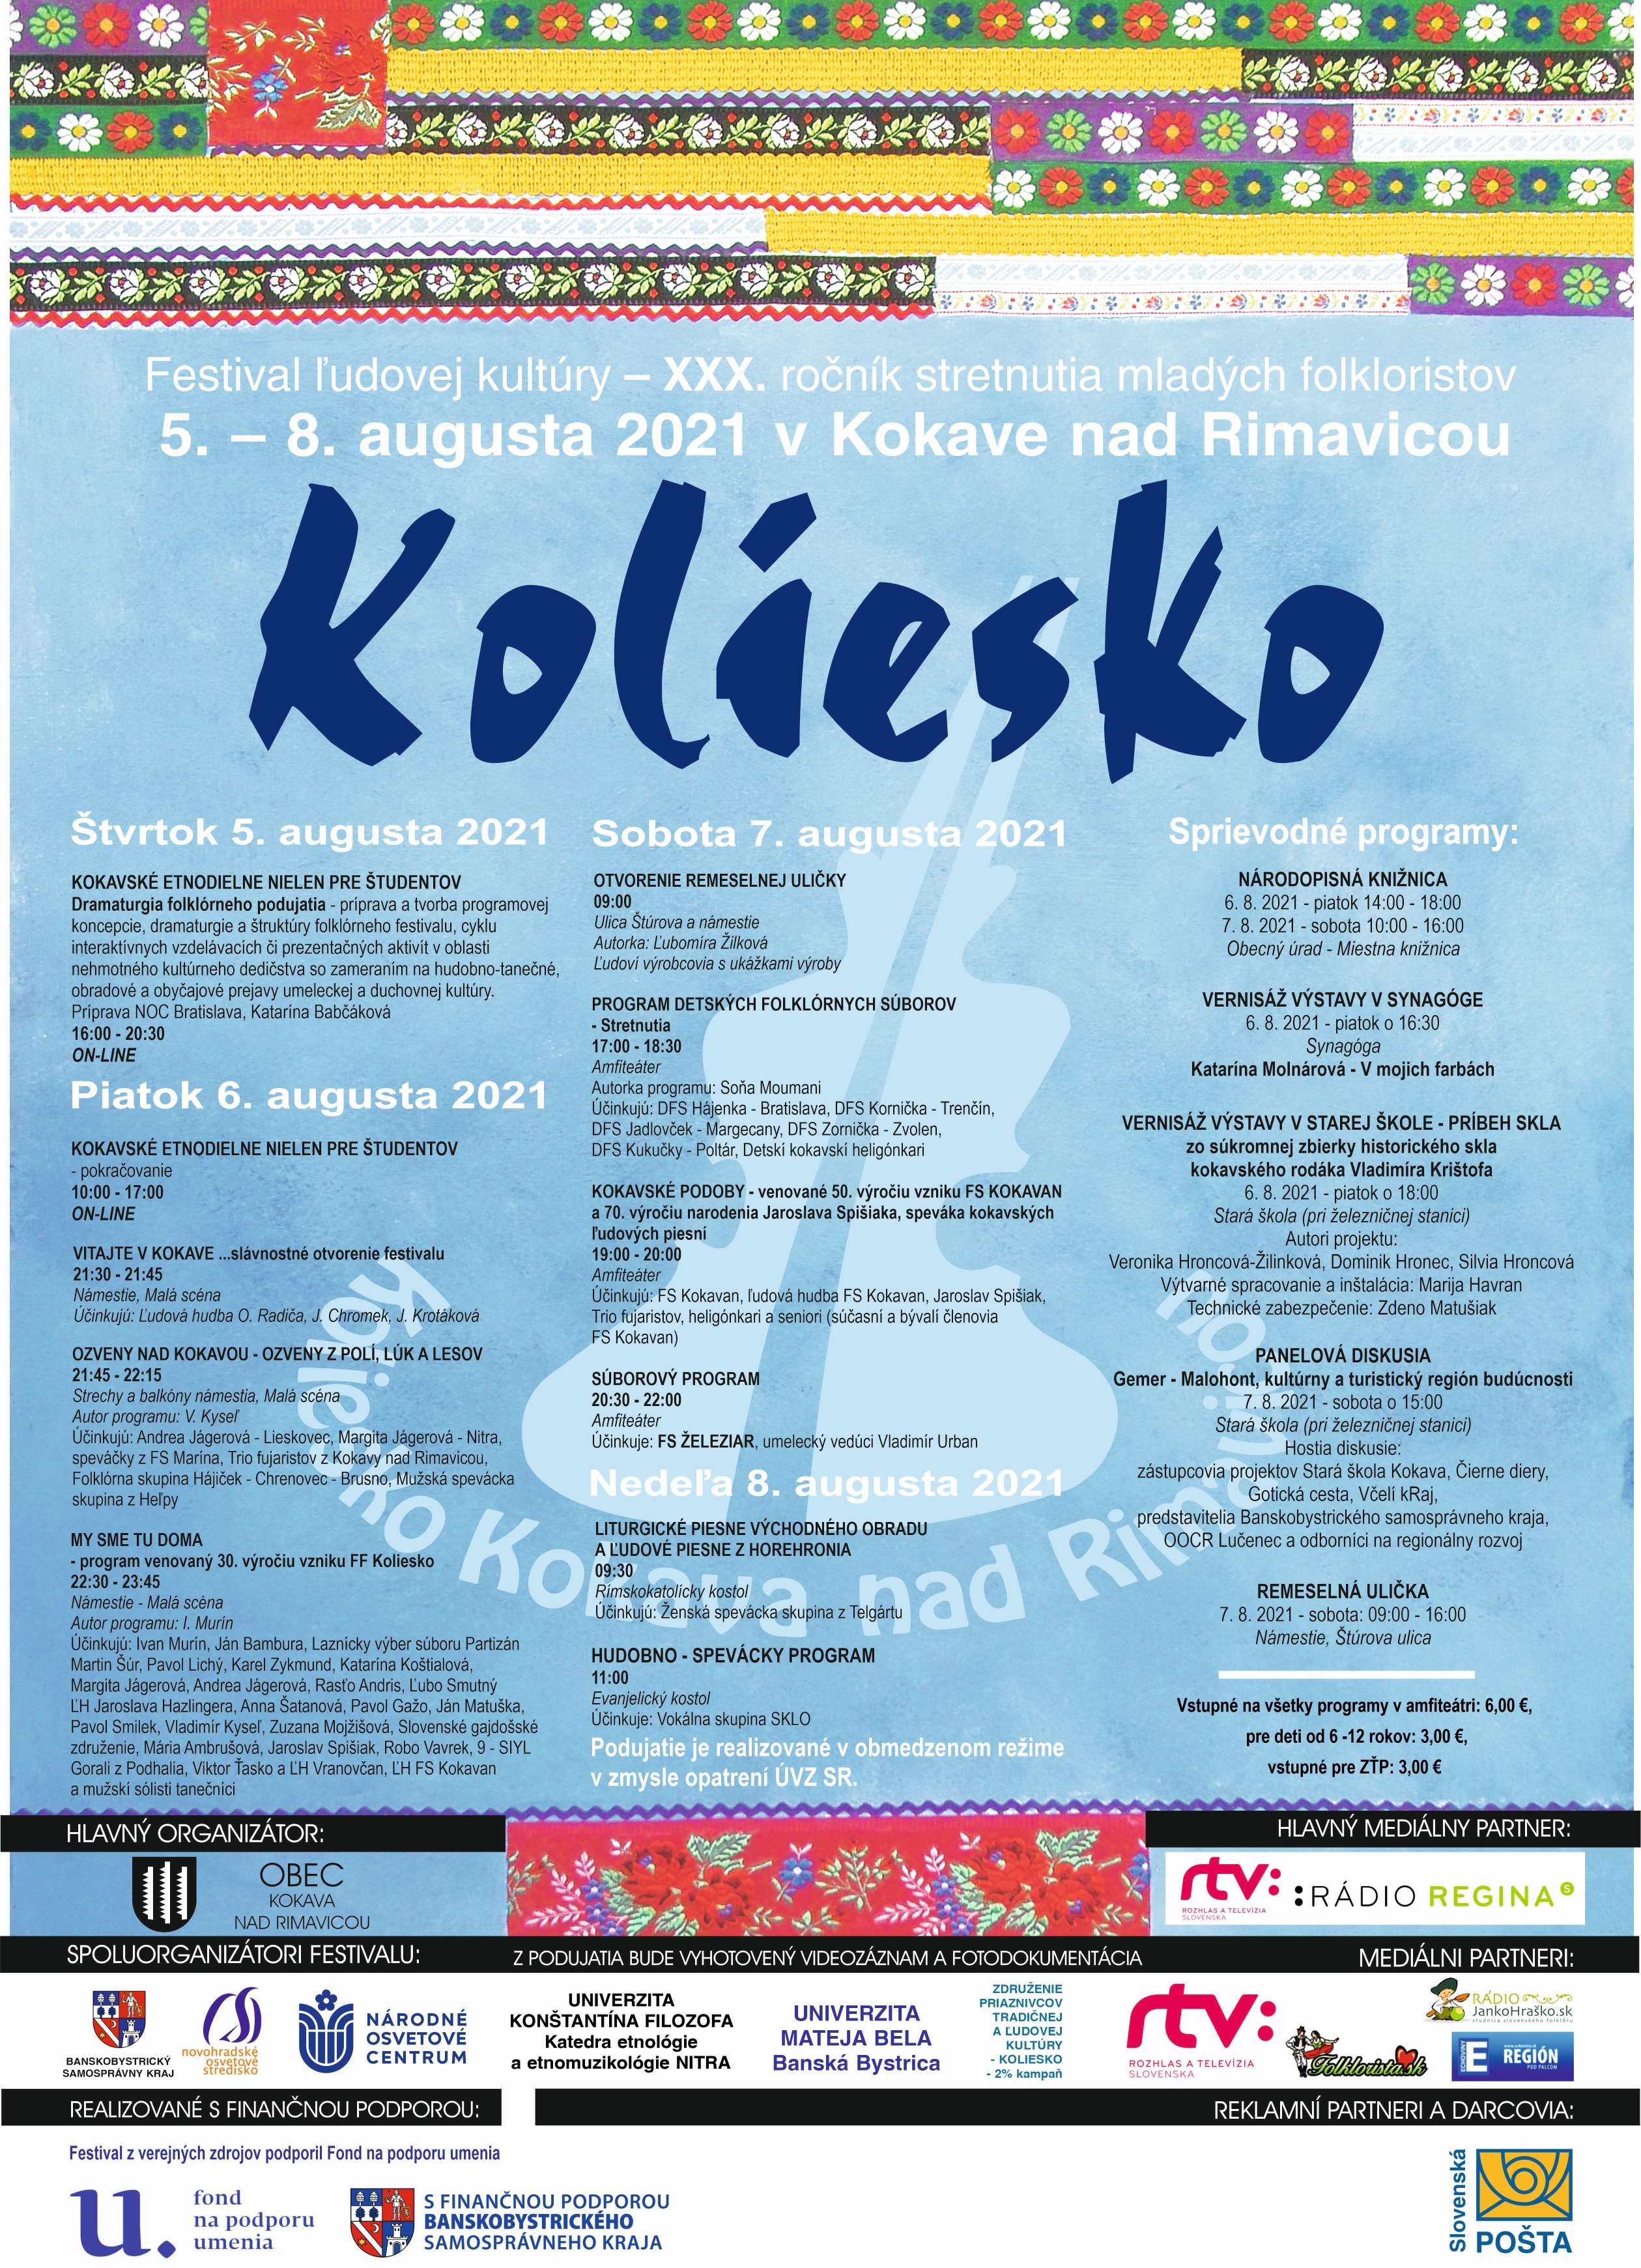 NOV - - - KOLIESKO 2021 Kokava nad Rimavicou - XXX. ronk festivalu udovej kultry mladch folkloristov